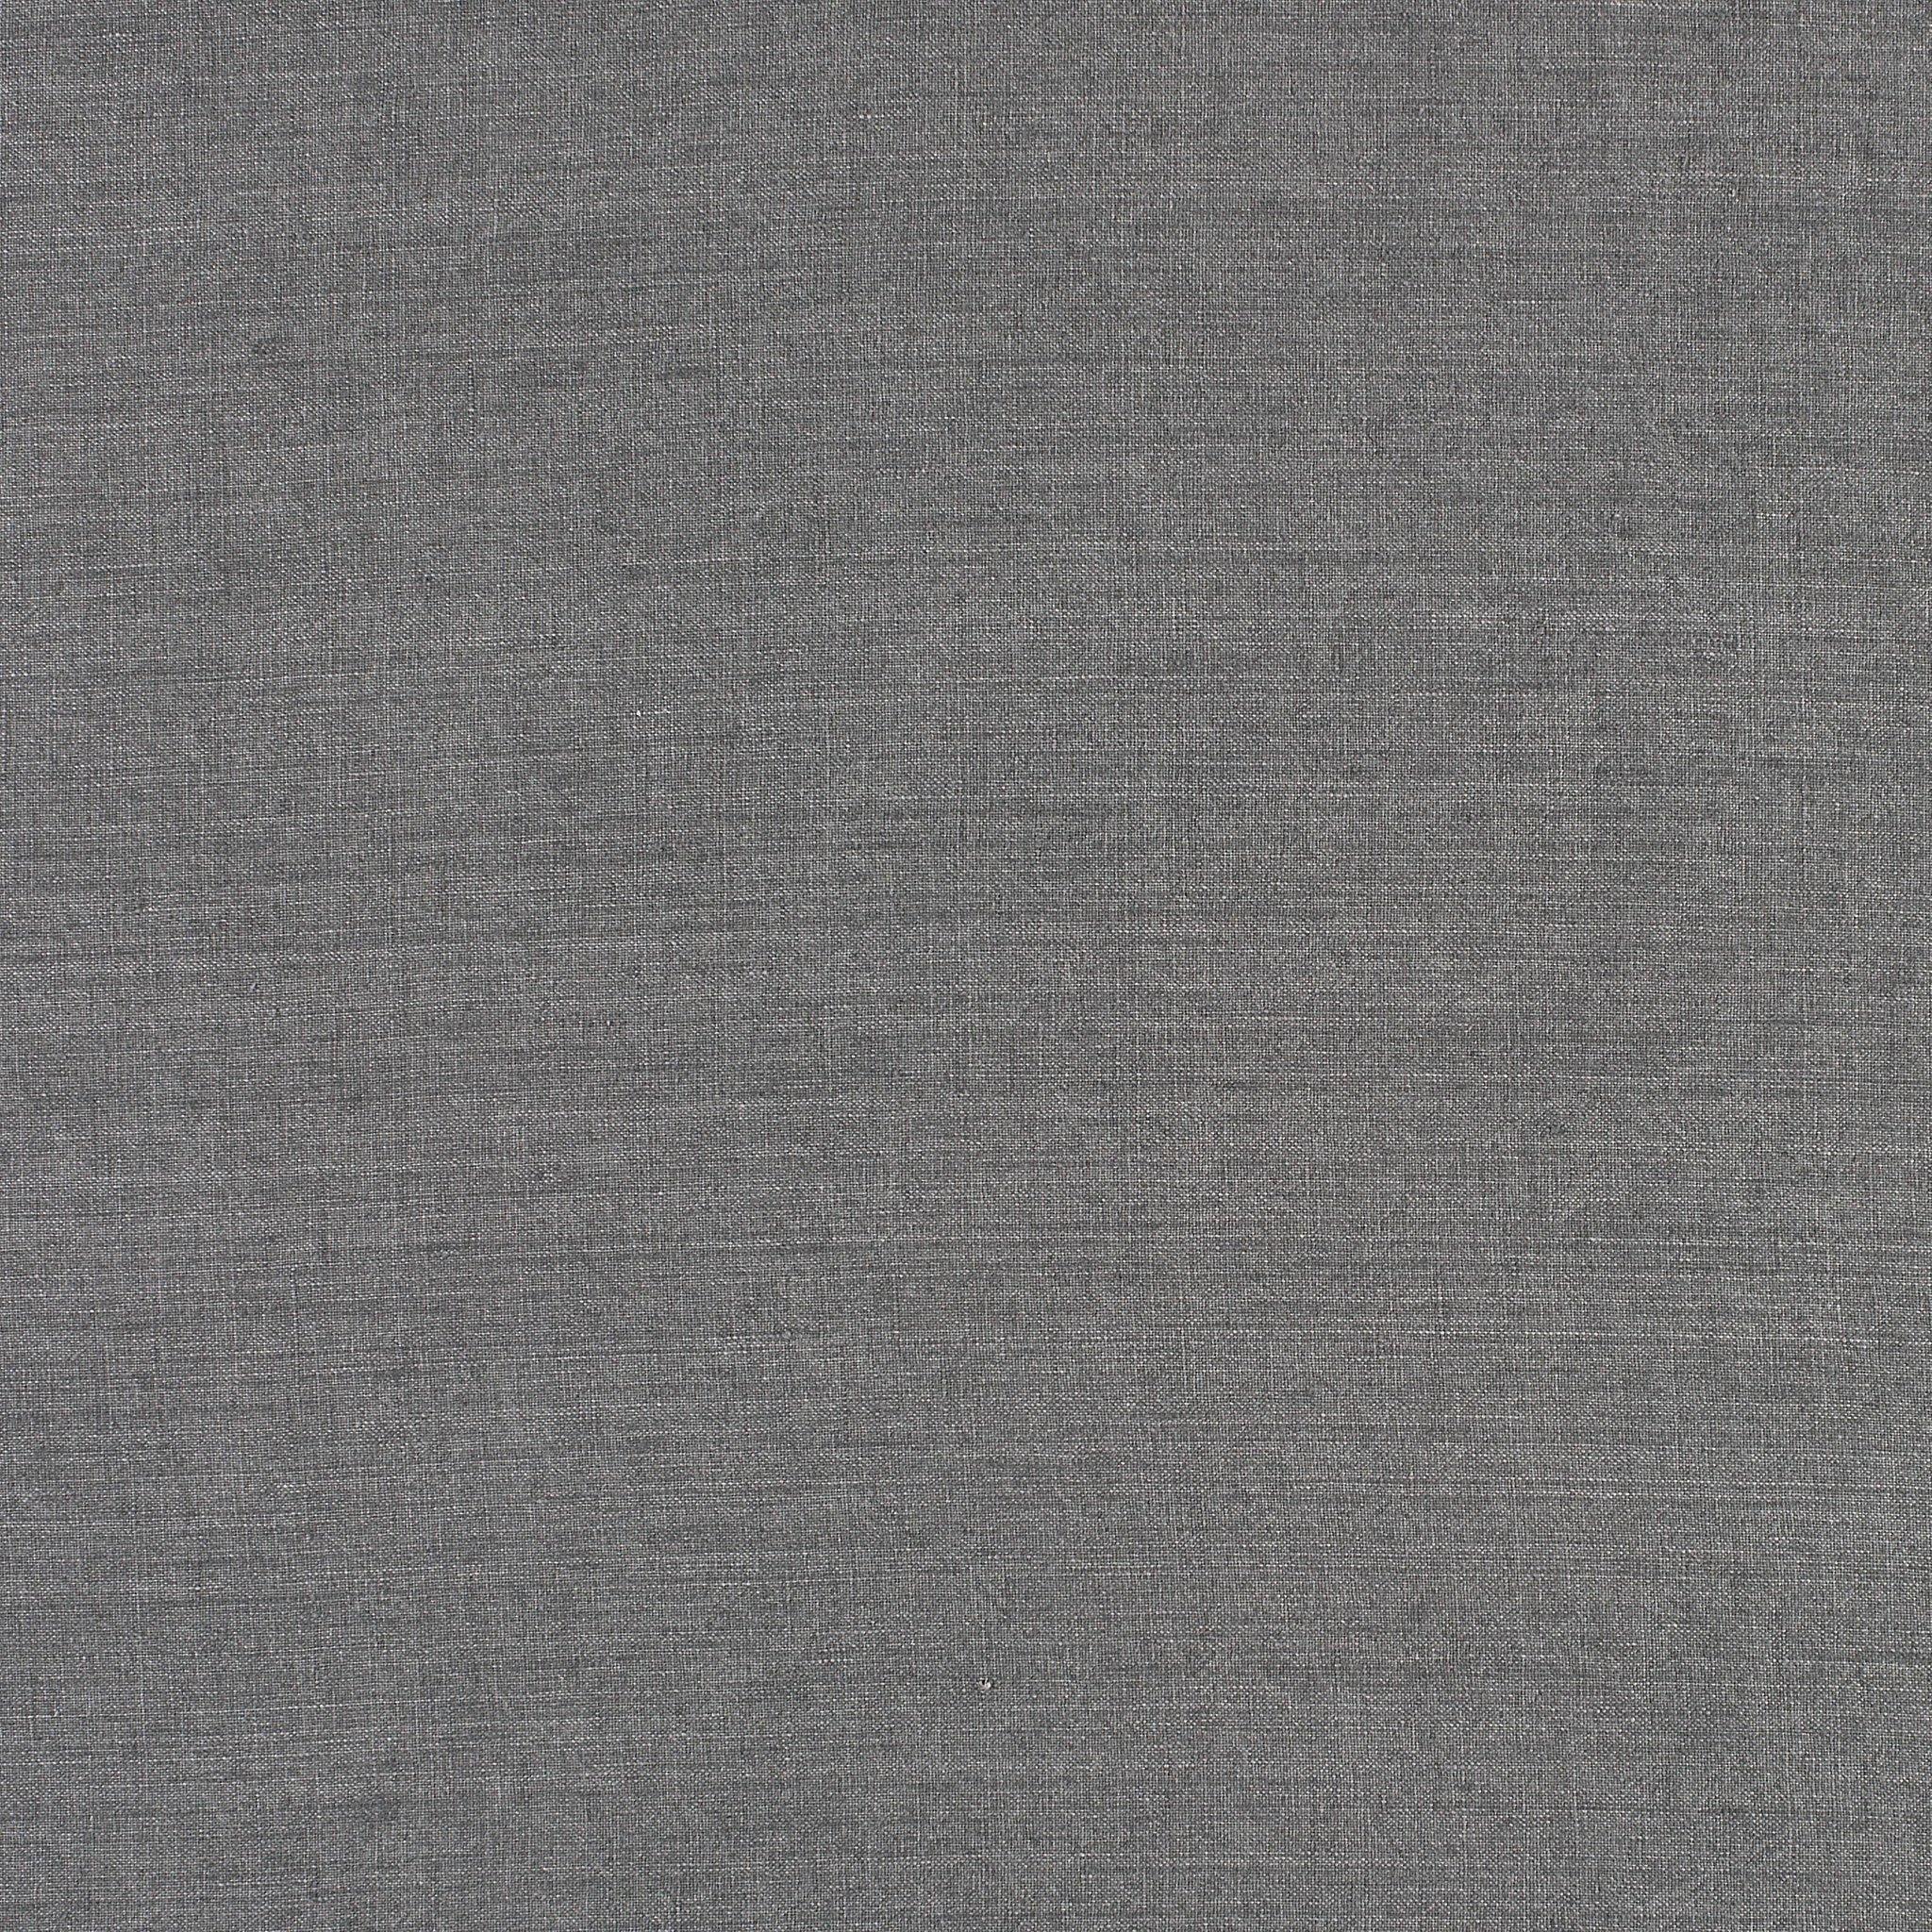 Nick Linen Slipcovered Sofa – Pure Salt Shoppe